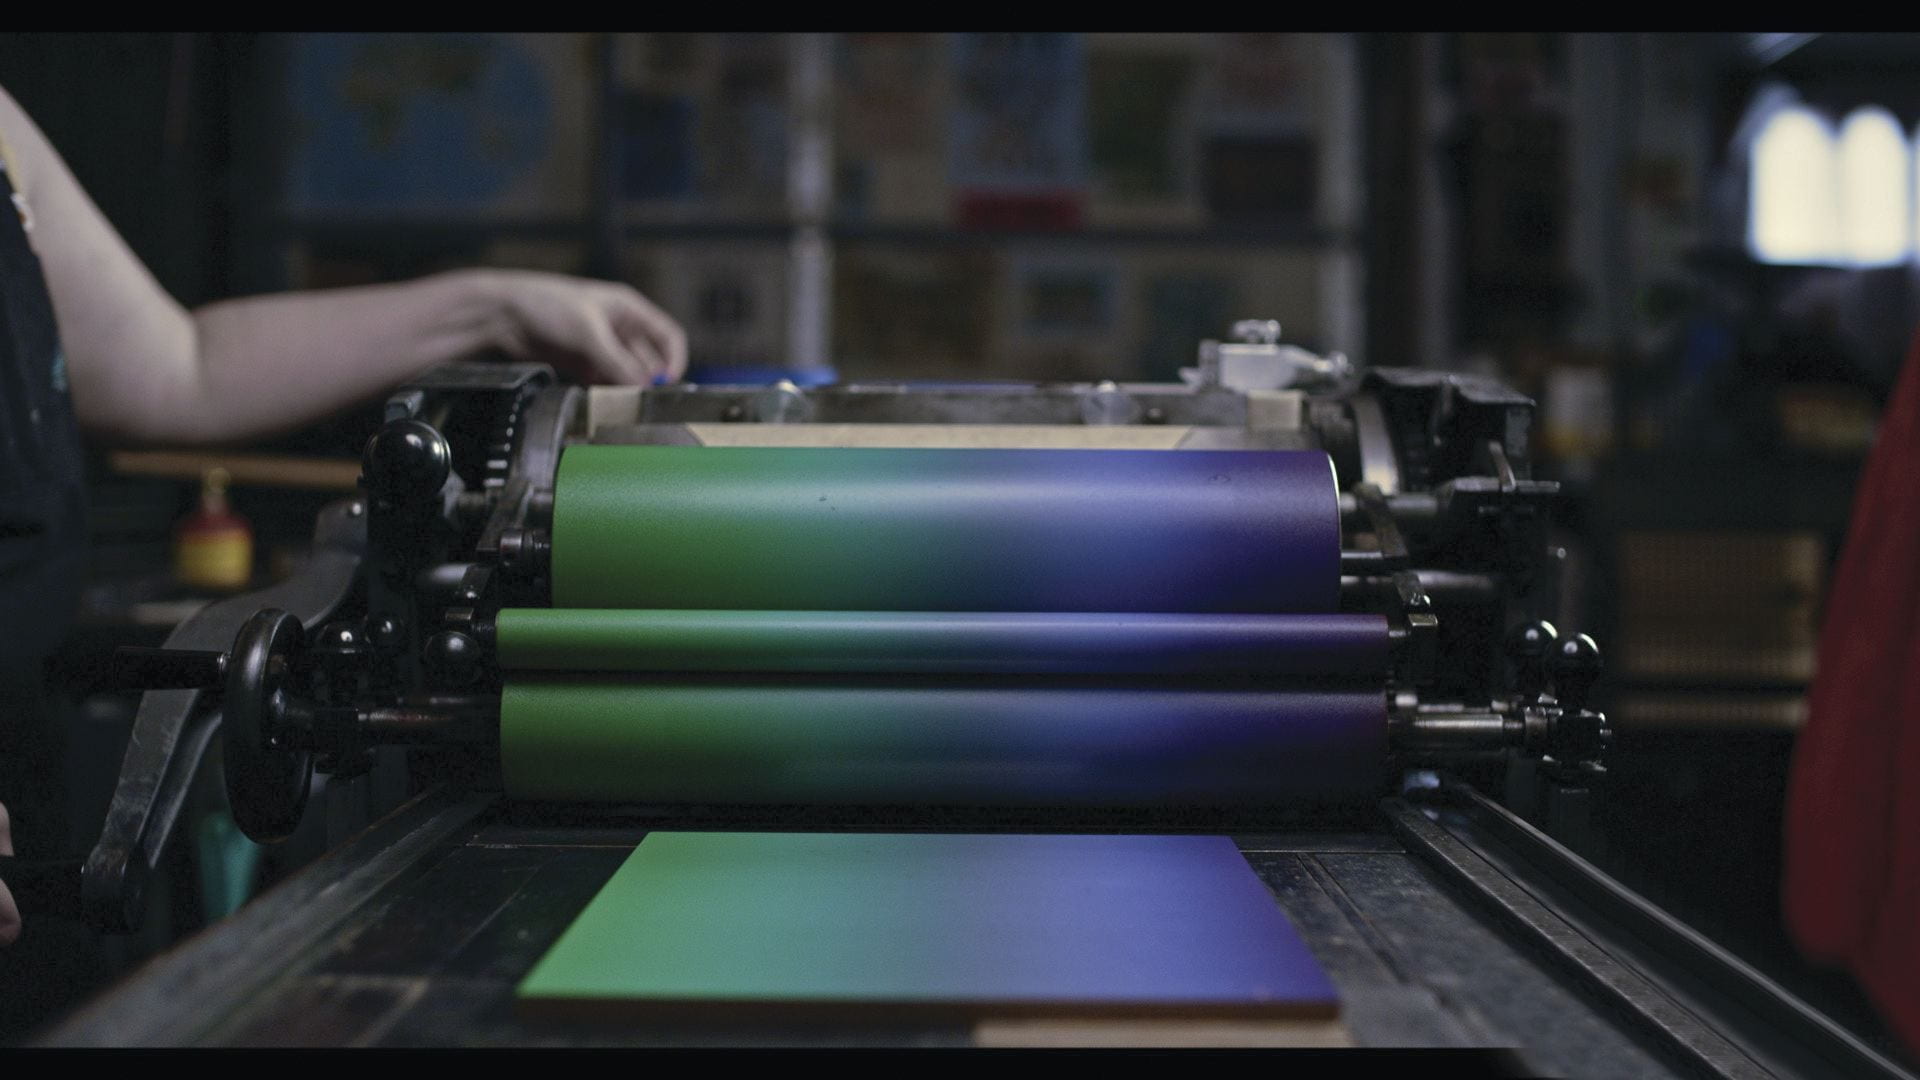 Pressing On: The Letterpress Film